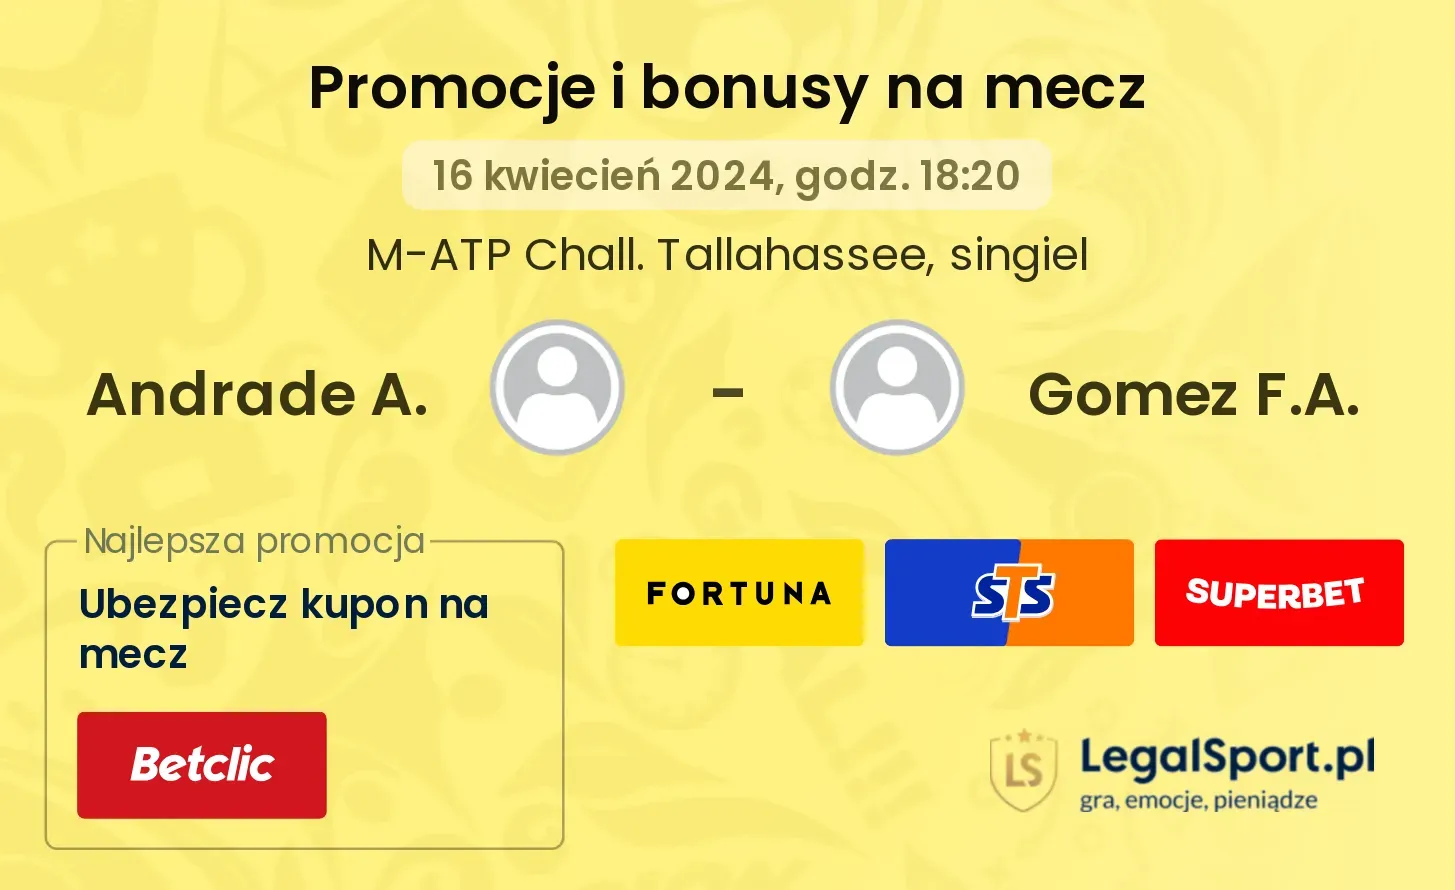 Andrade A. - Gomez F.A. promocje bonusy na mecz